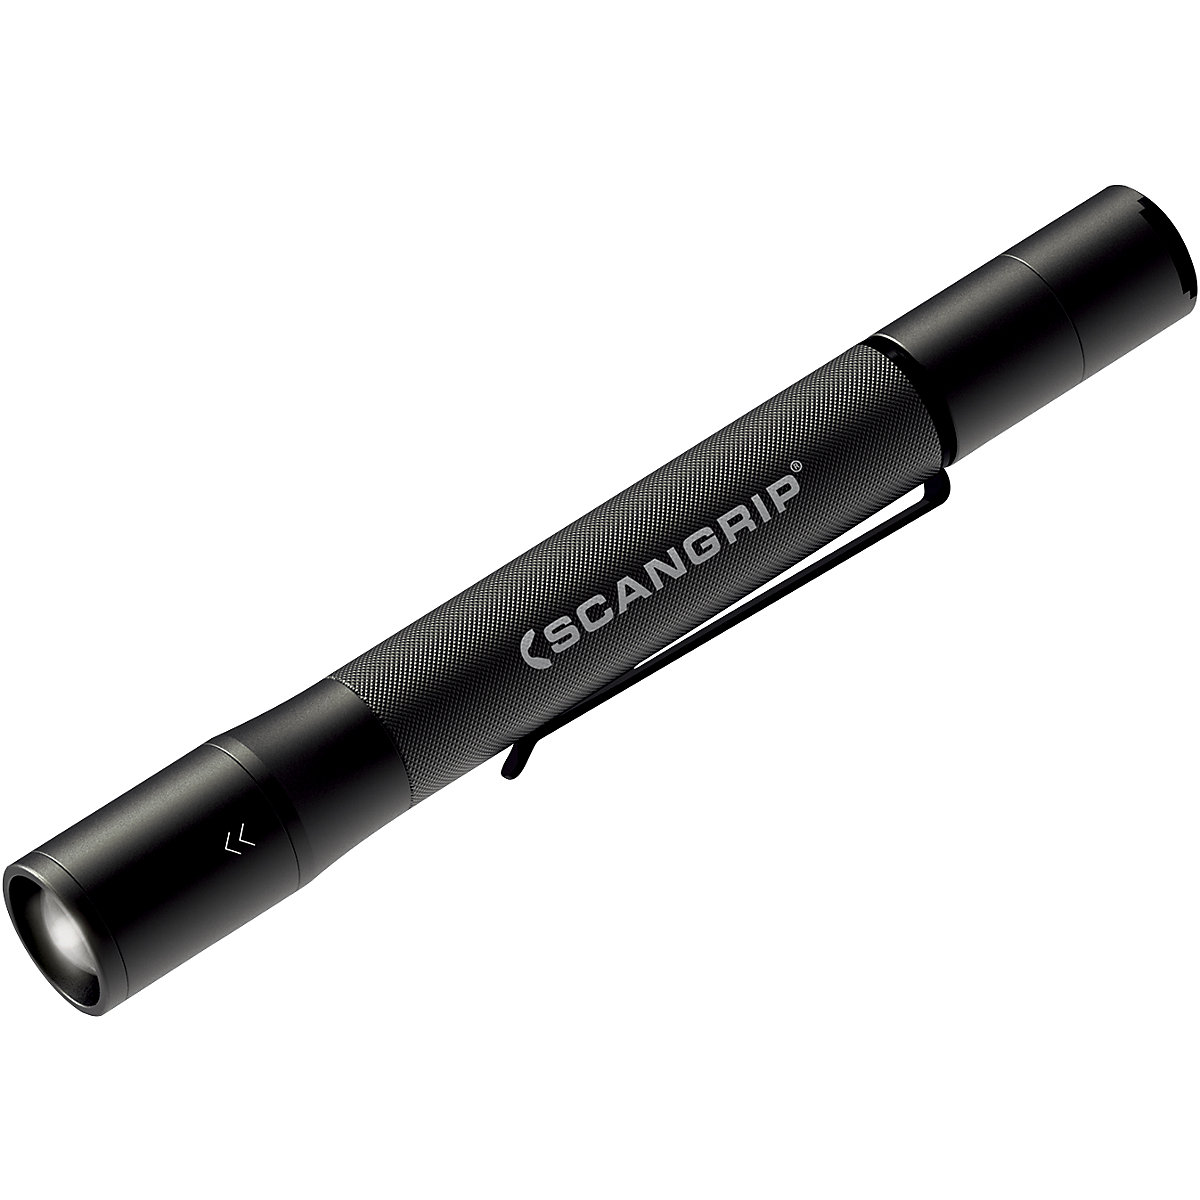 Akumulatorowa latarka długopisowa LED FLASH PEN R – SCANGRIP (Zdjęcie produktu 9)-8